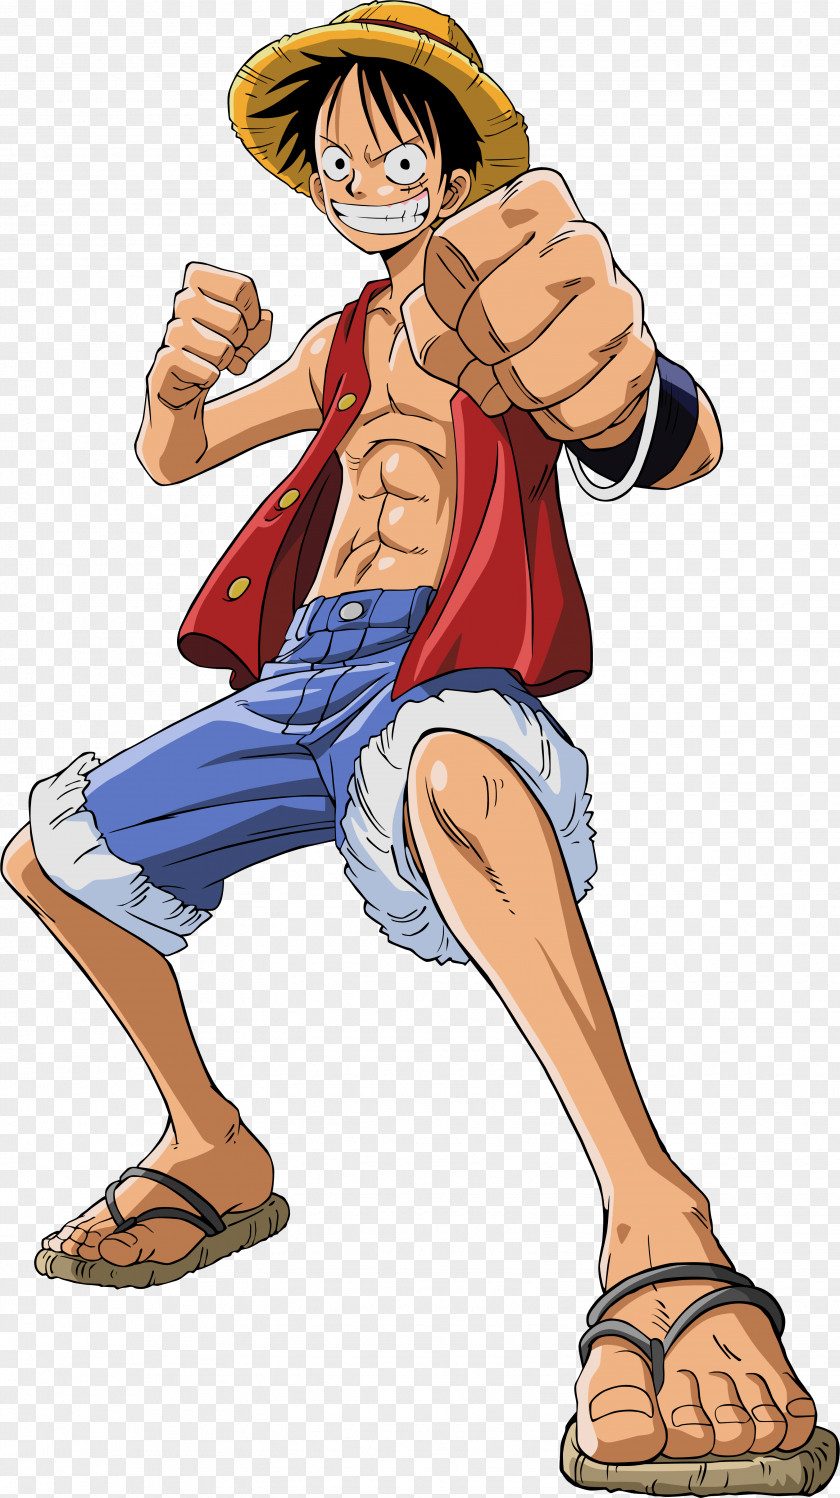 One Piece Luffy Transparent Background Monkey D. Nami Roronoa Zoro Franky Vinsmoke Sanji PNG